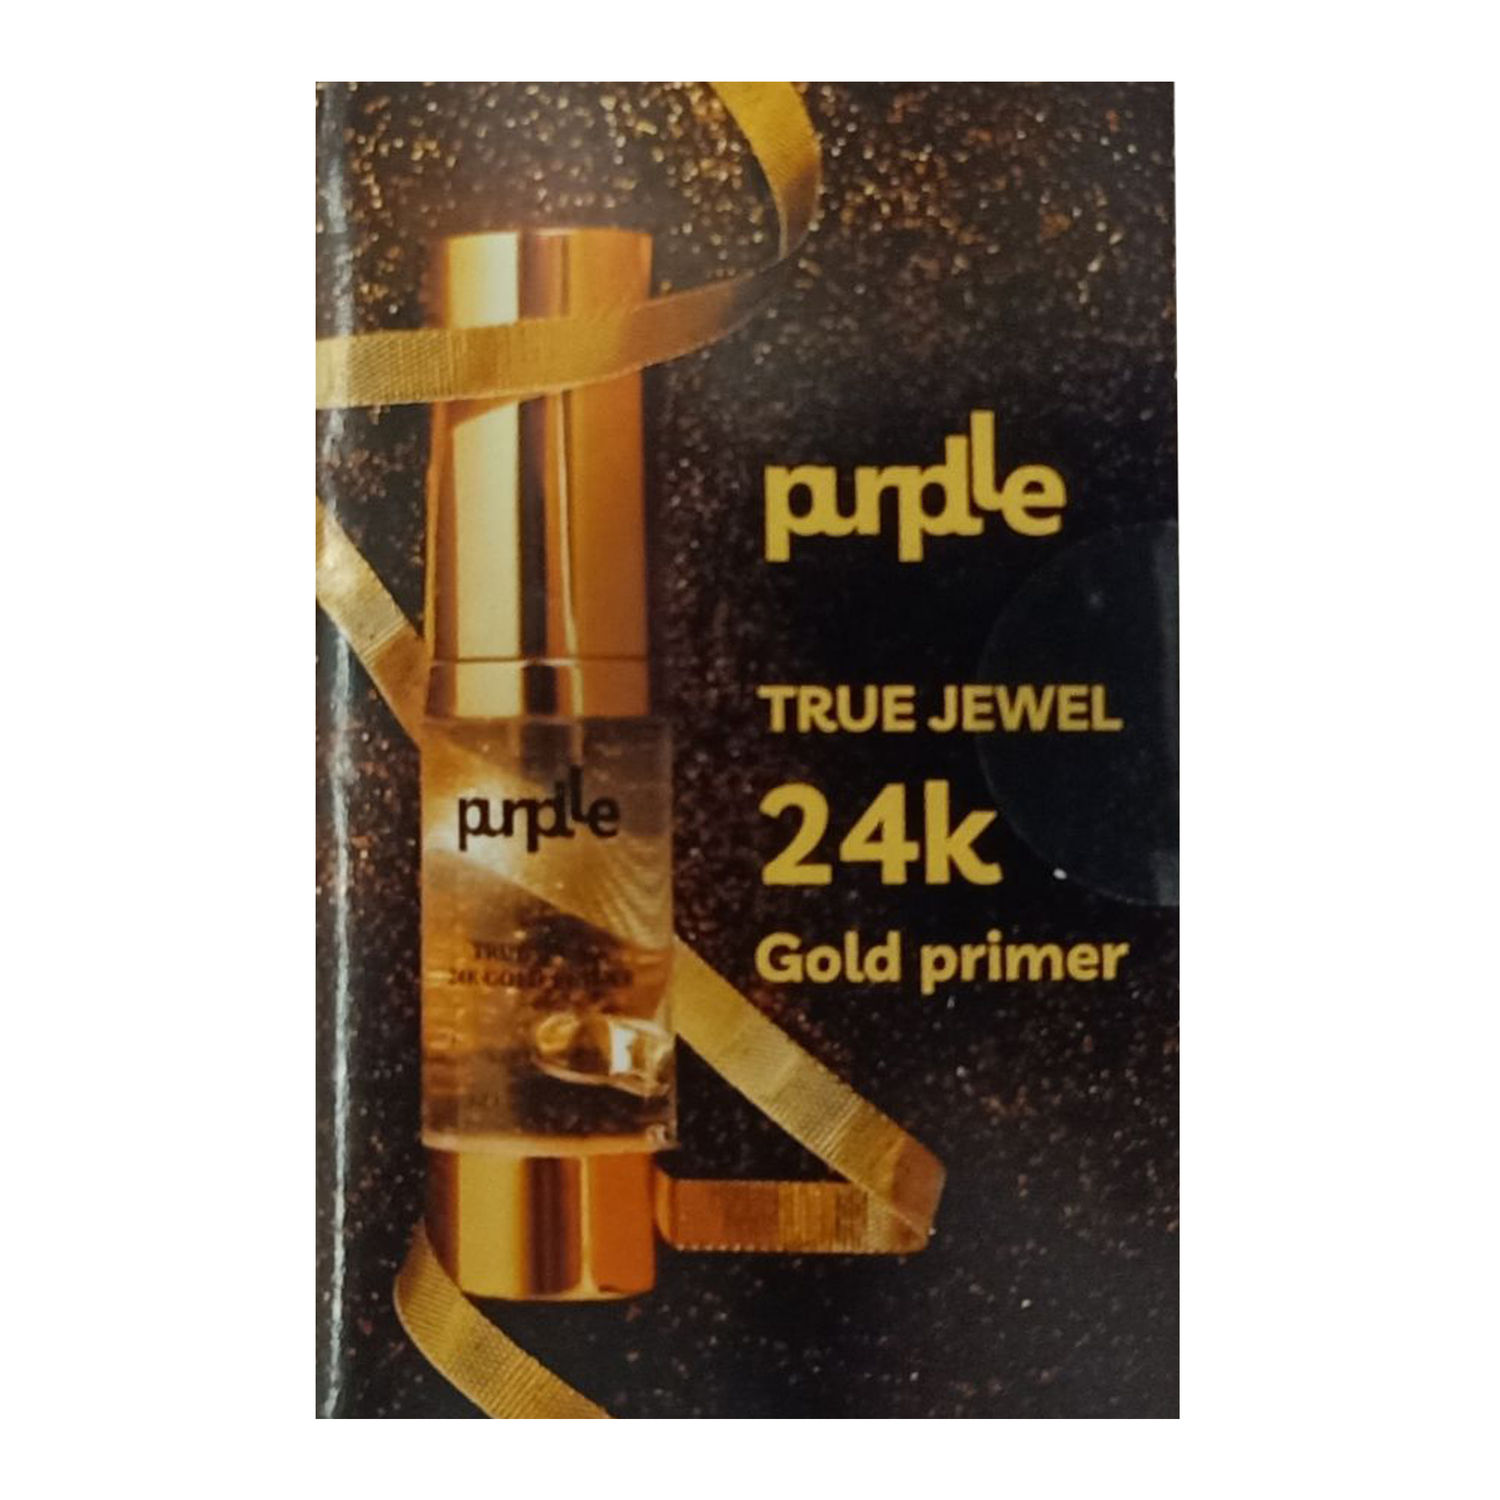 Buy Purplle 24k gold primer 1 ml - Purplle